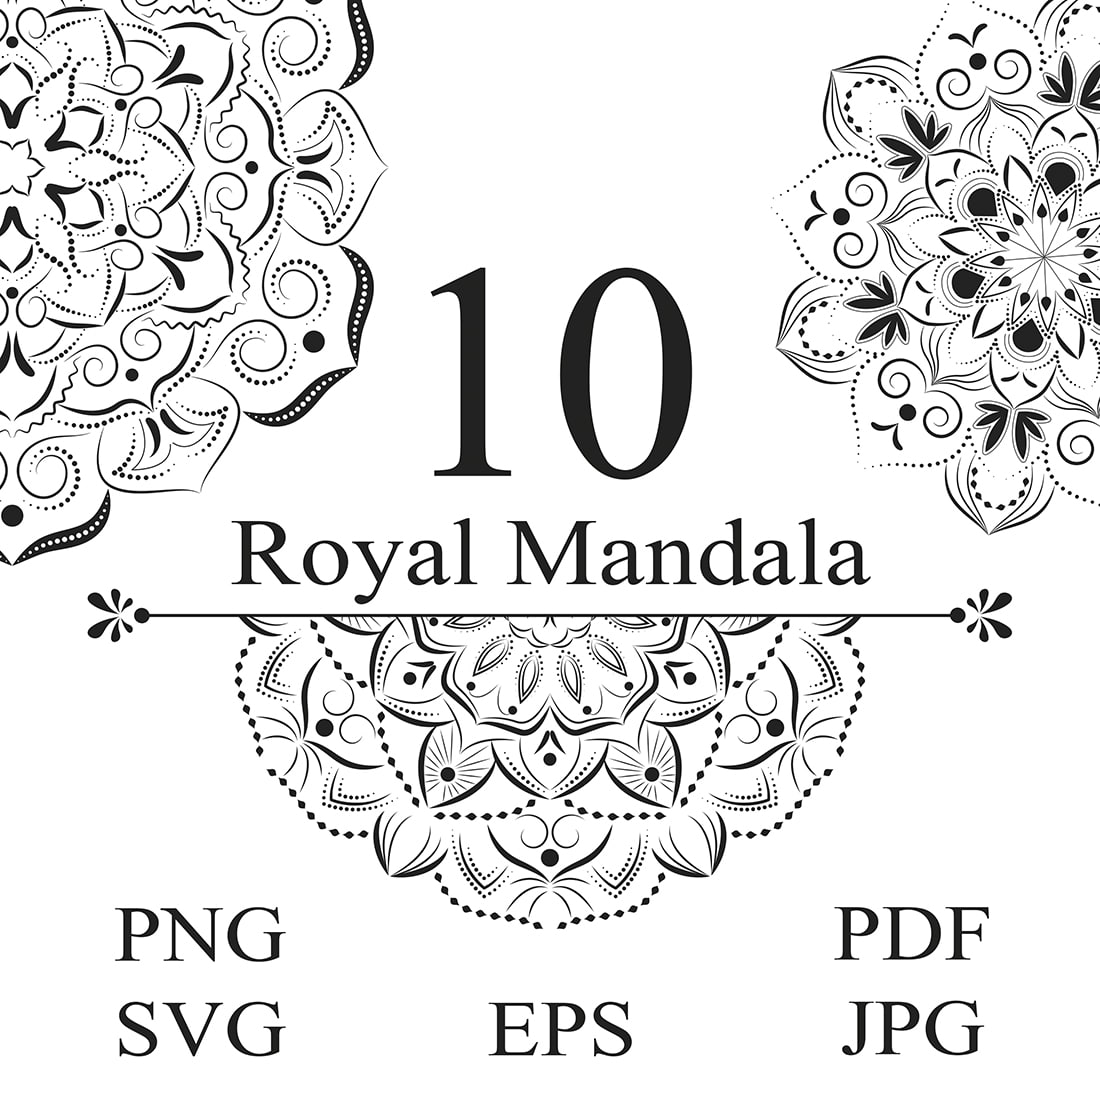 10 Royal Floral Mandala Vectors Pack cover image.